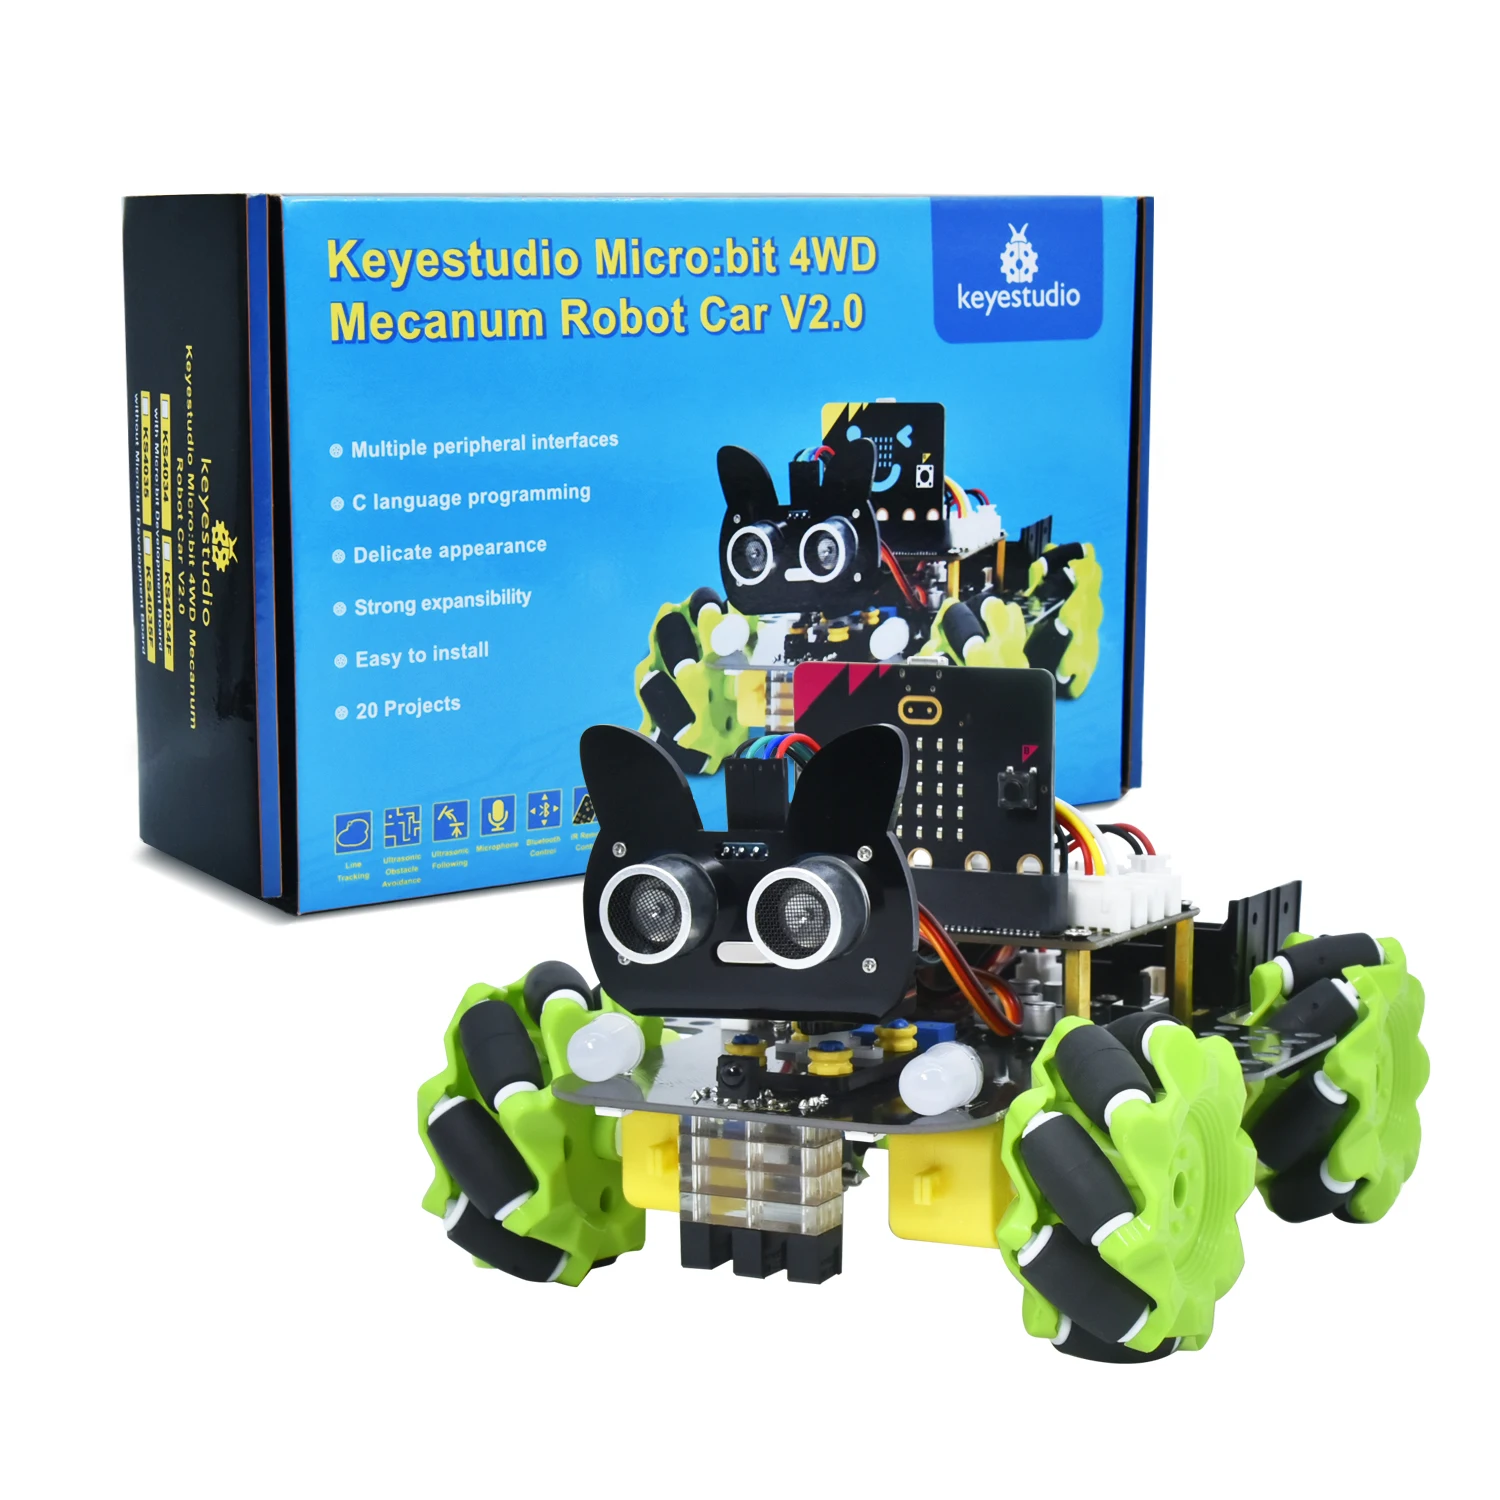 Keyestudio Microbit V2.0 4WD Mecanum Robot Car With Python Language Programming System For Smart DIY Car Dedicated To Micro:bit